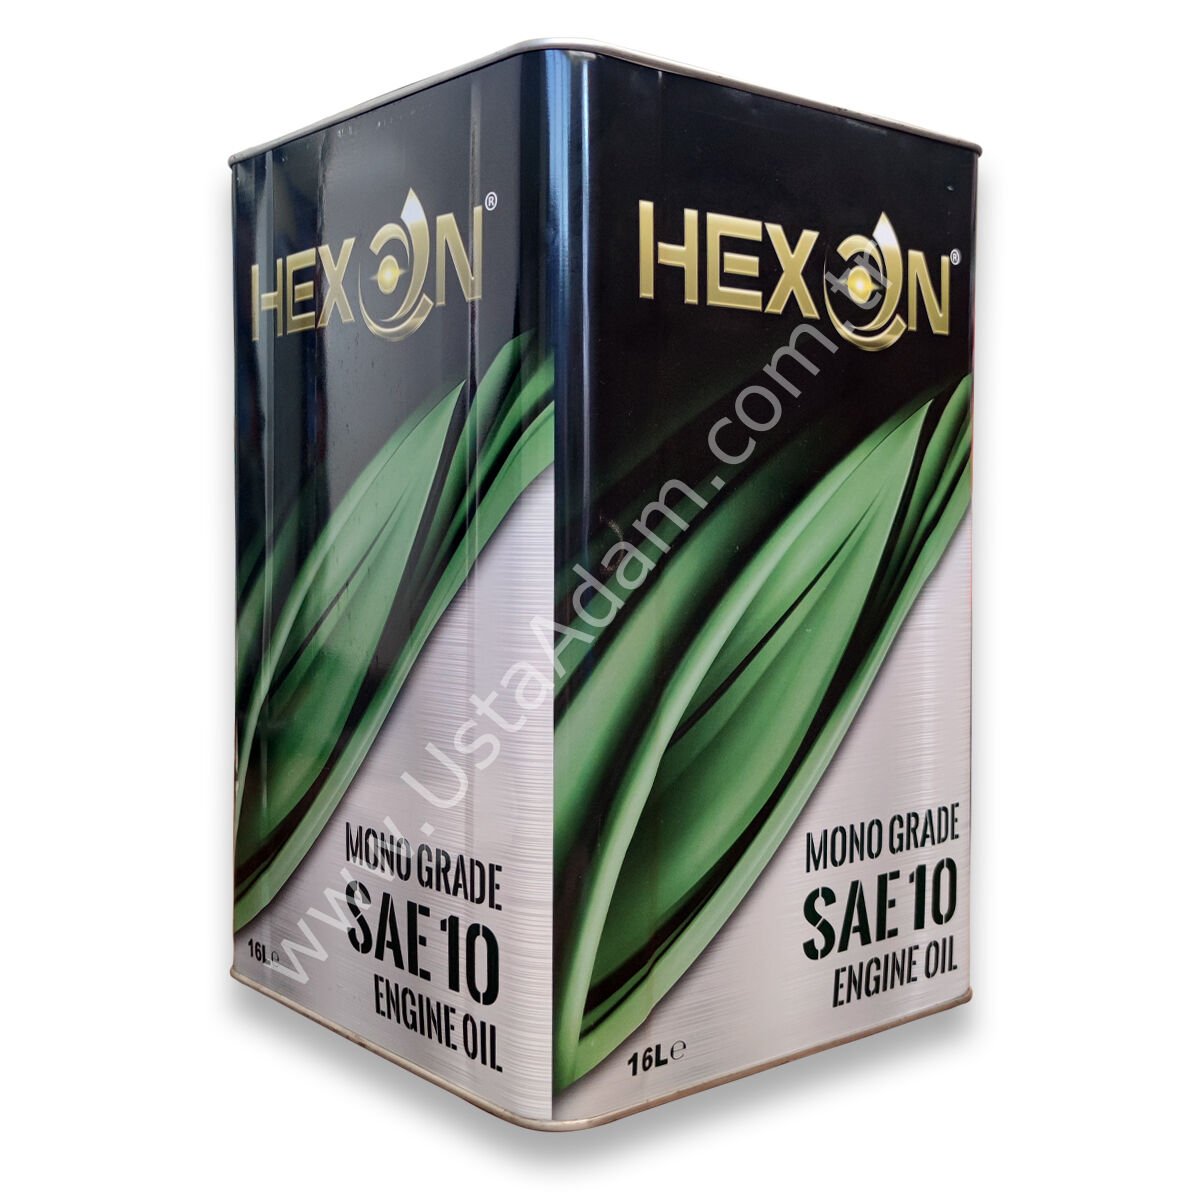 HEXON Mono Grade SAE 10 - 14 KG